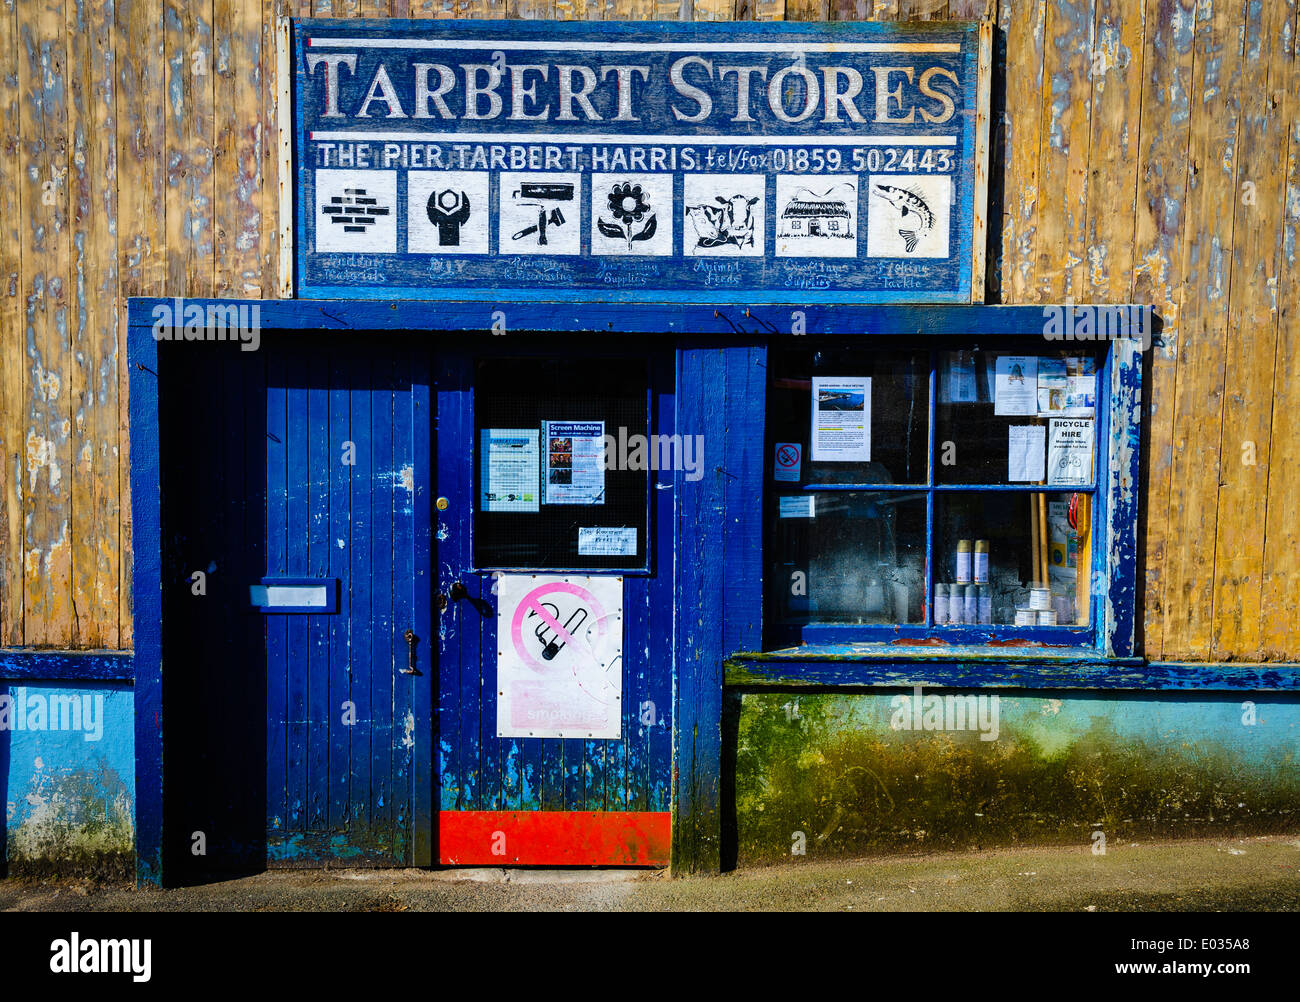 Frontage of Tarbert Stores, Tarbert, isle of harris, Outer Hebrides, Scotland Stock Photo